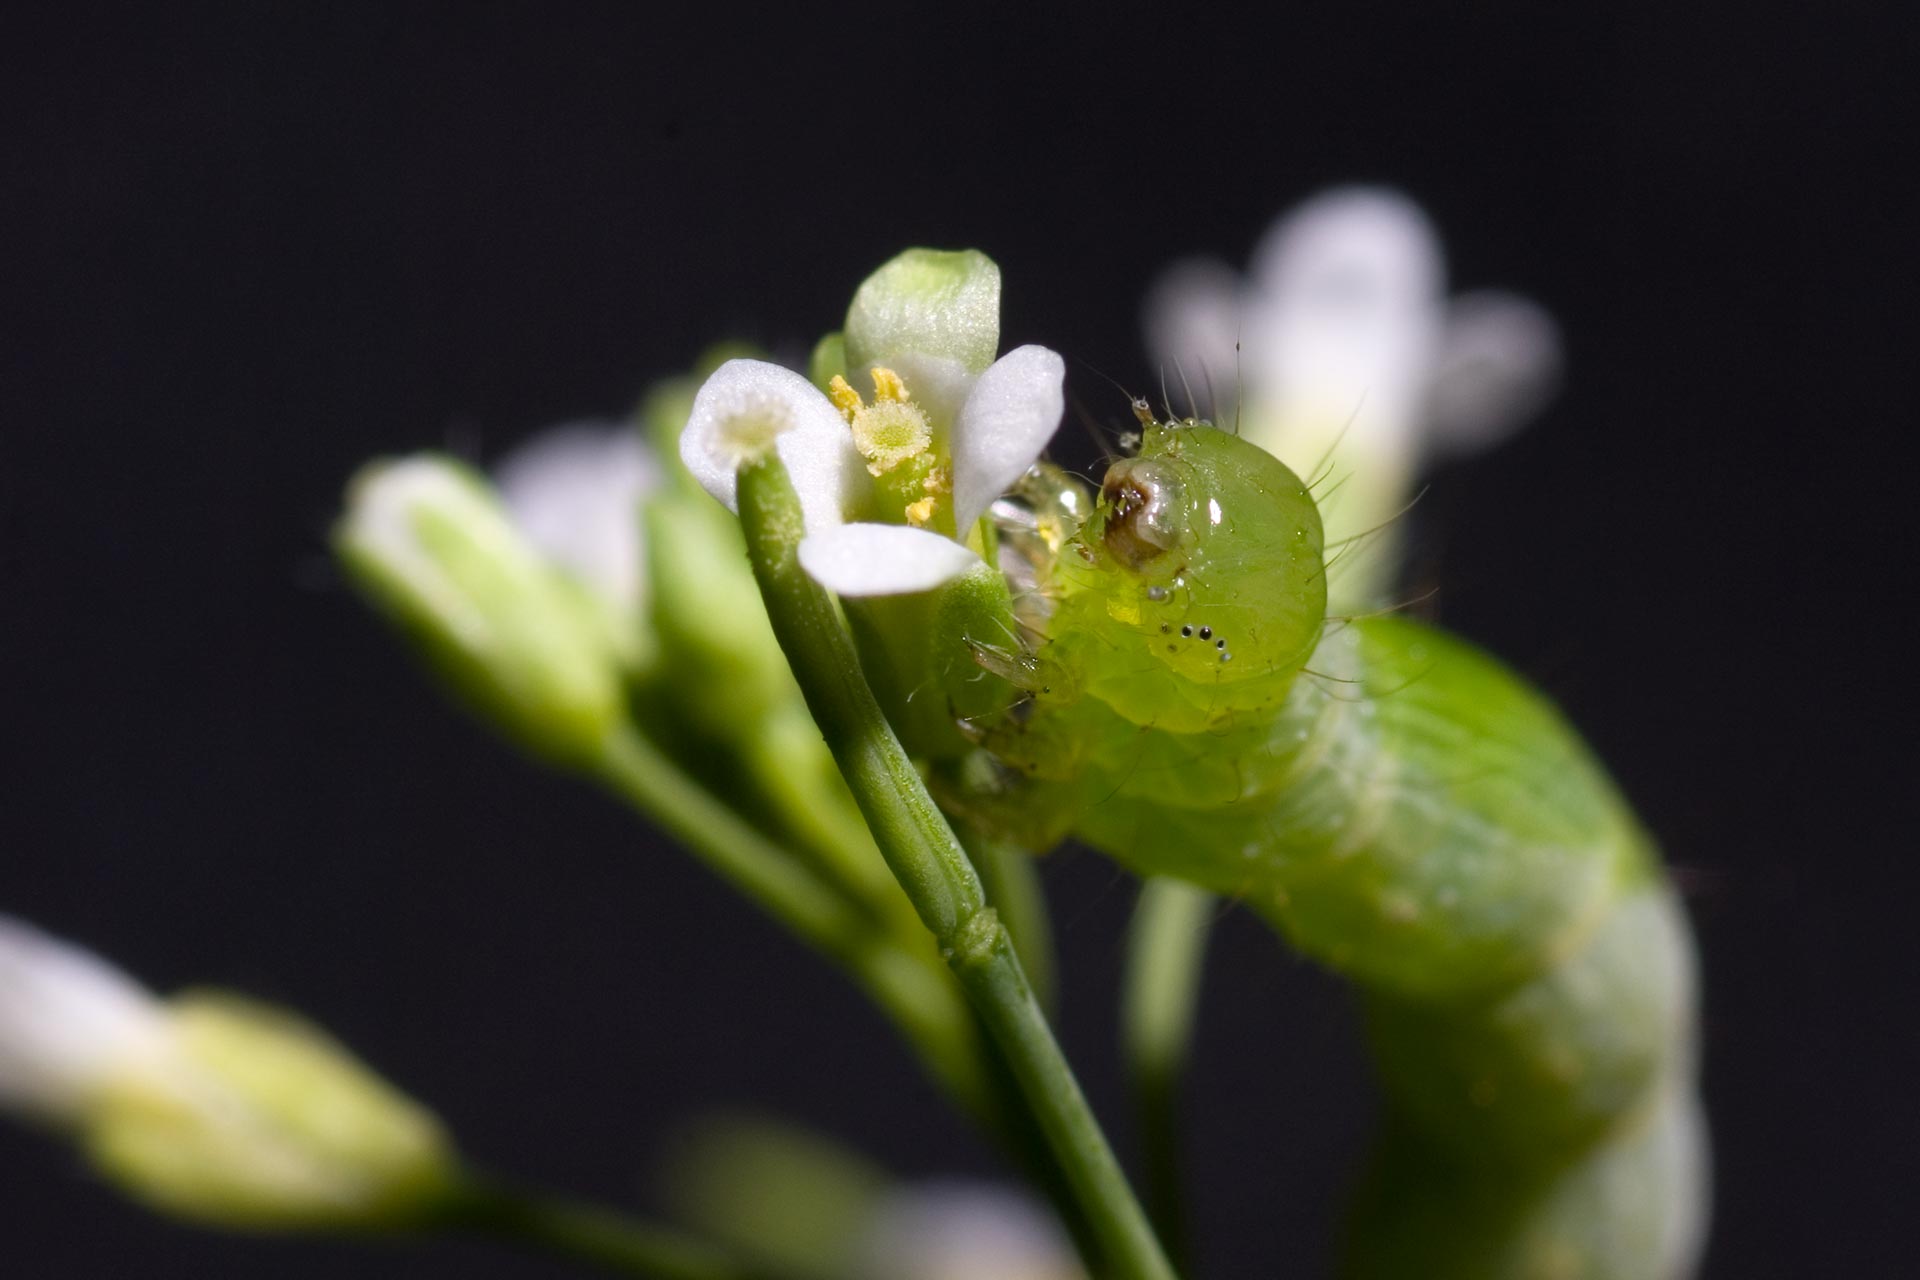 Caterpillar eating a plant